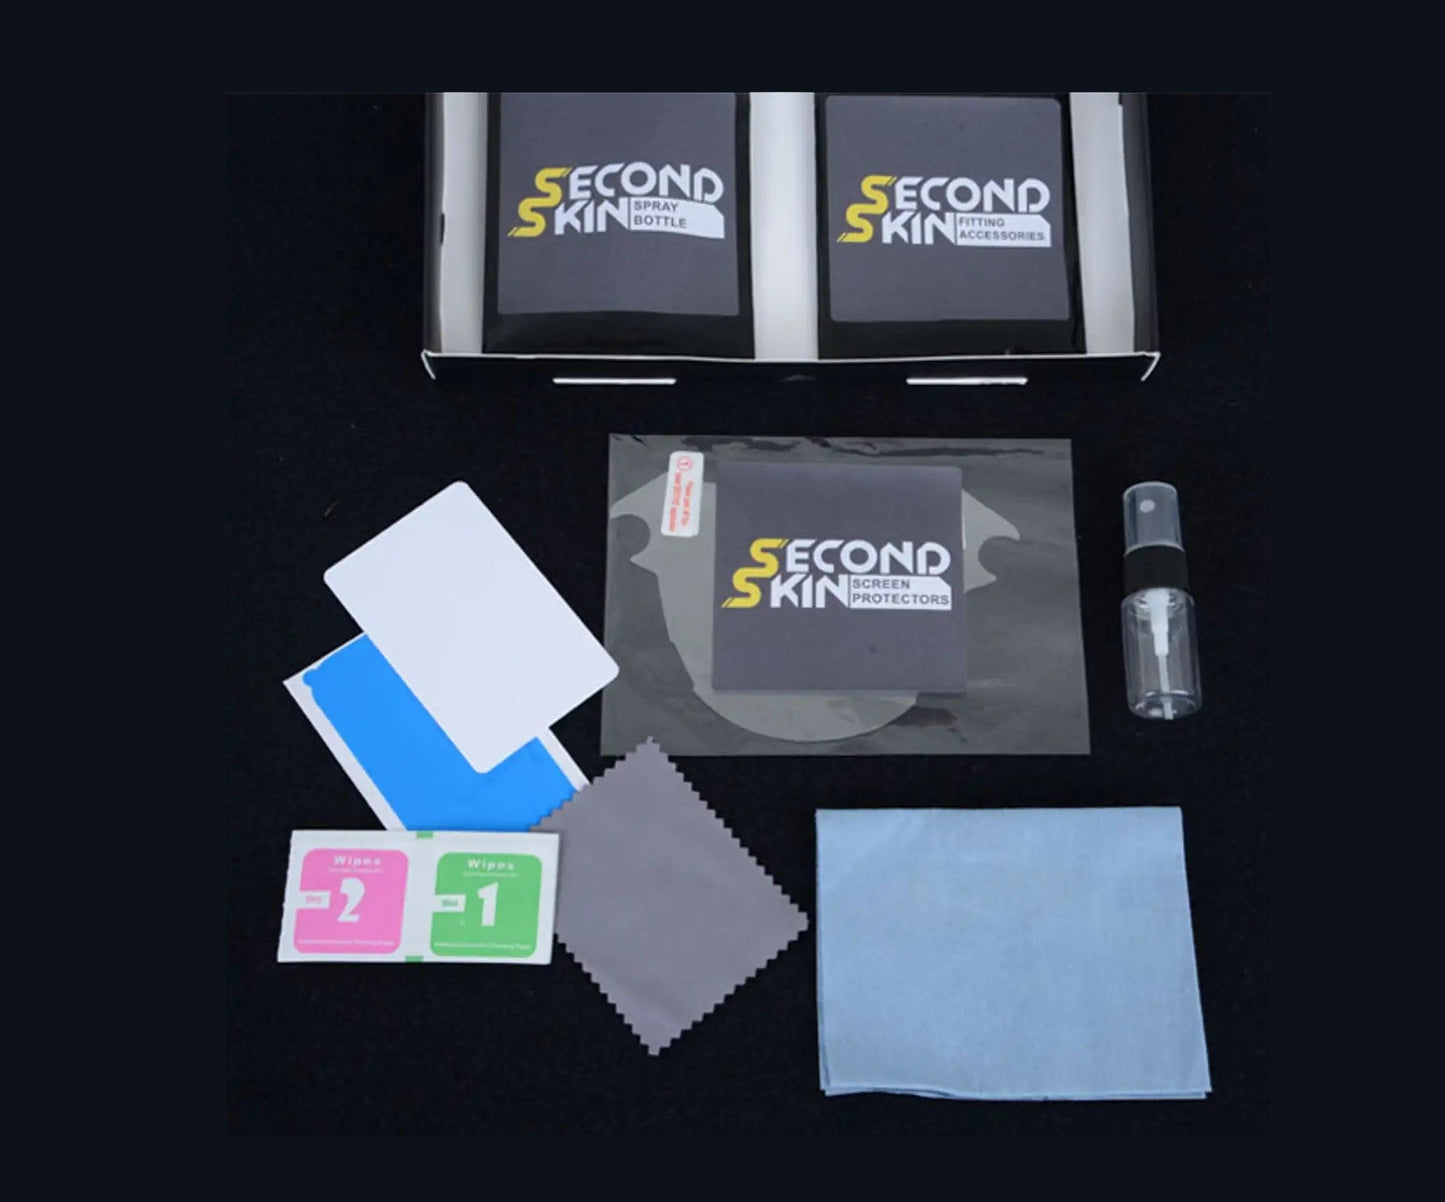 DSP-HON-003 - R&G RACING Honda X-ADV 750 (17/20) Dashboard Screen Protector Kit